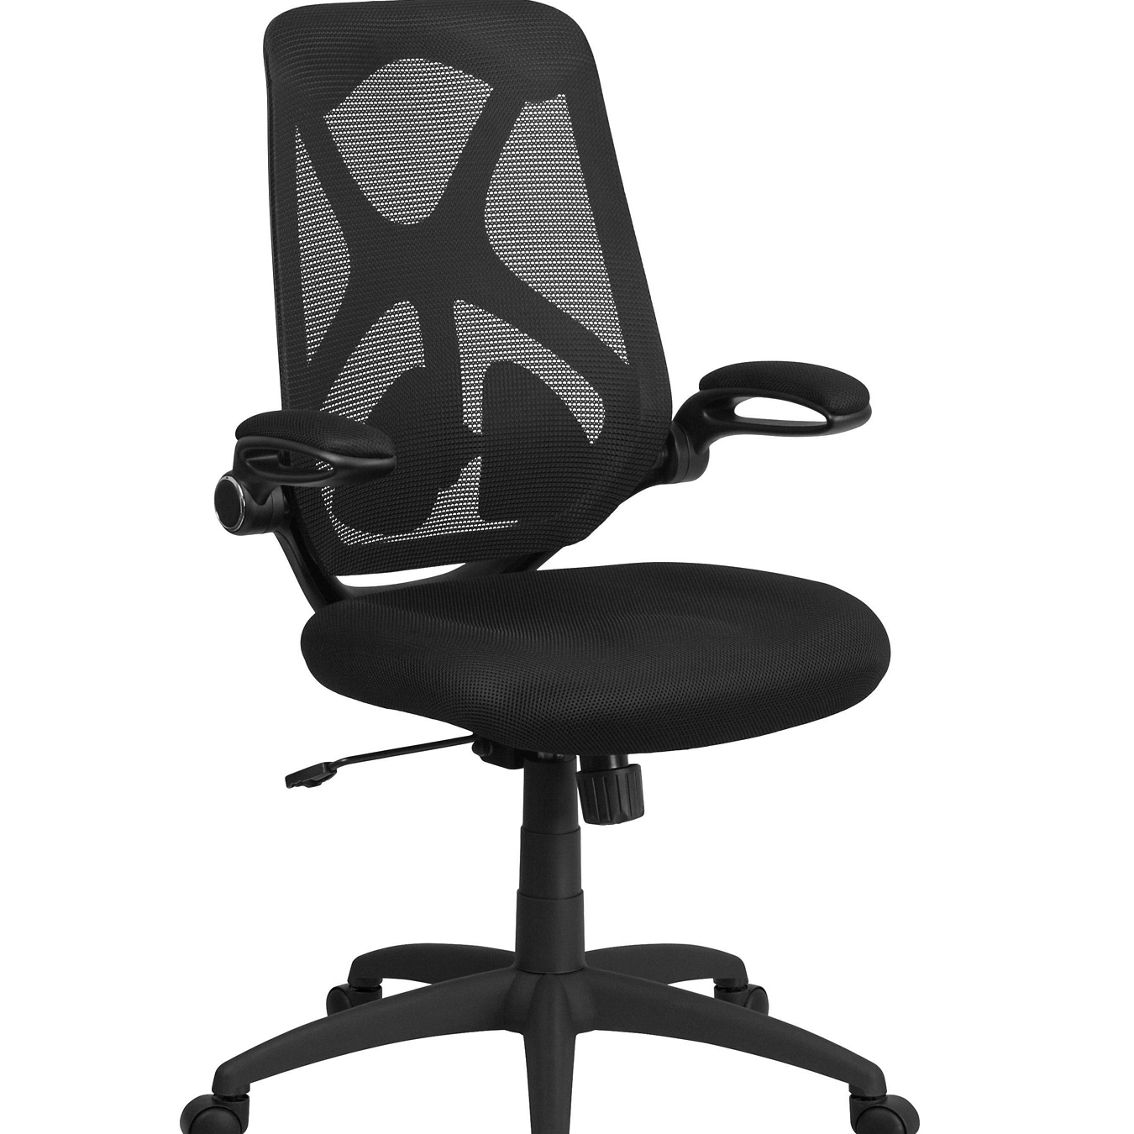 Flash Furniture Ergonomic Gray Mesh Office Chair with Synchro-Tilt